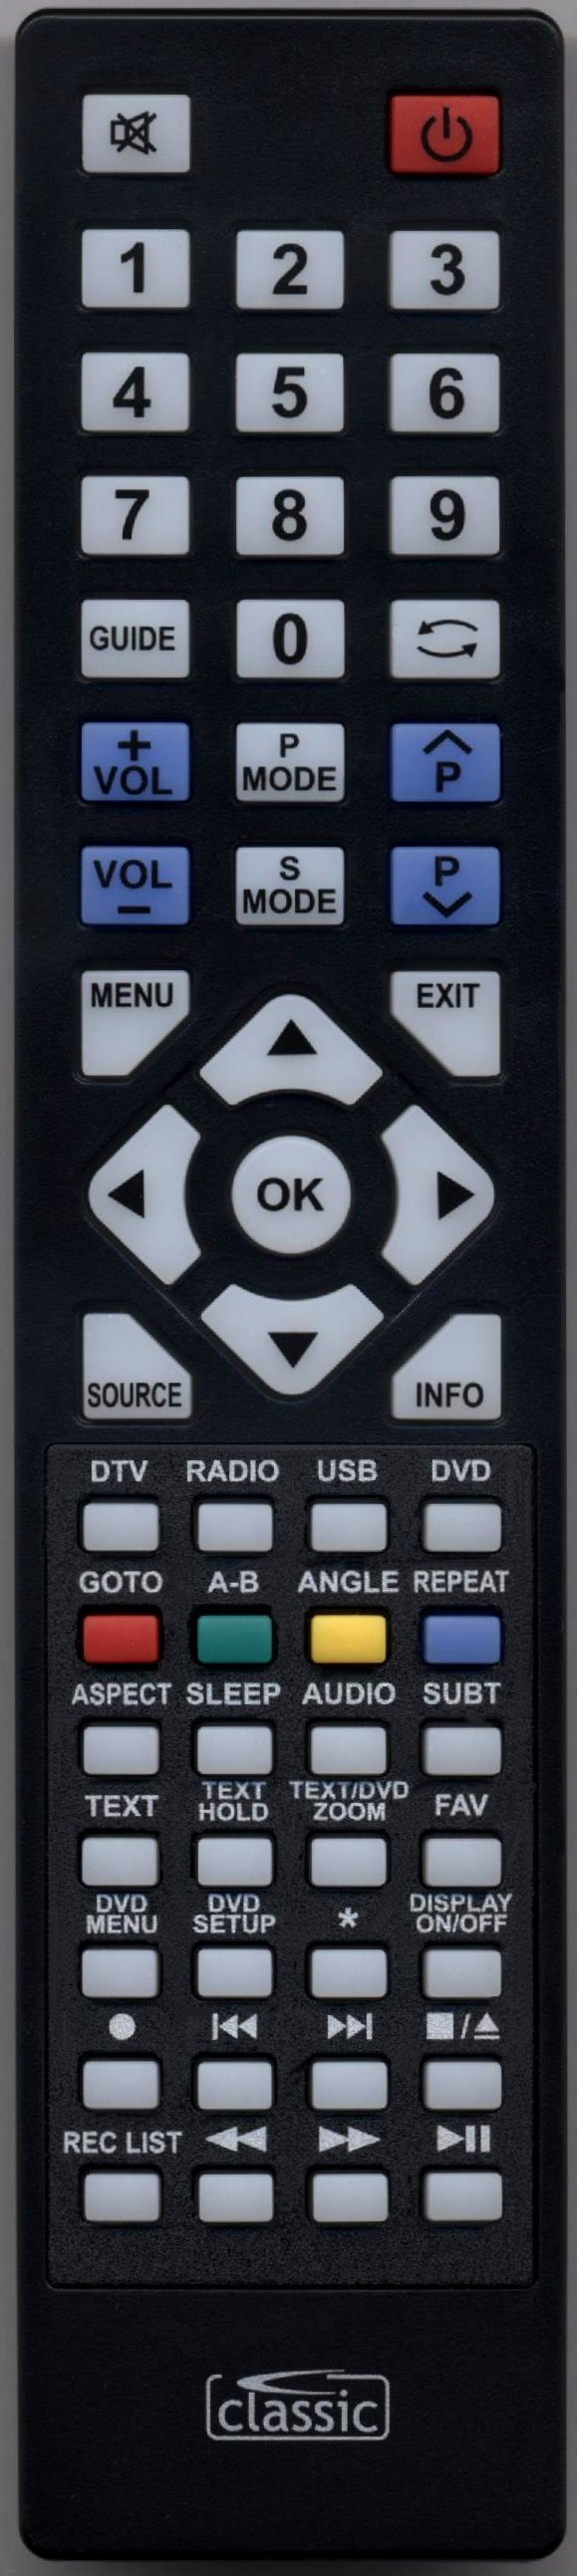 JMB JT0250001/02 Remote Control Alternative